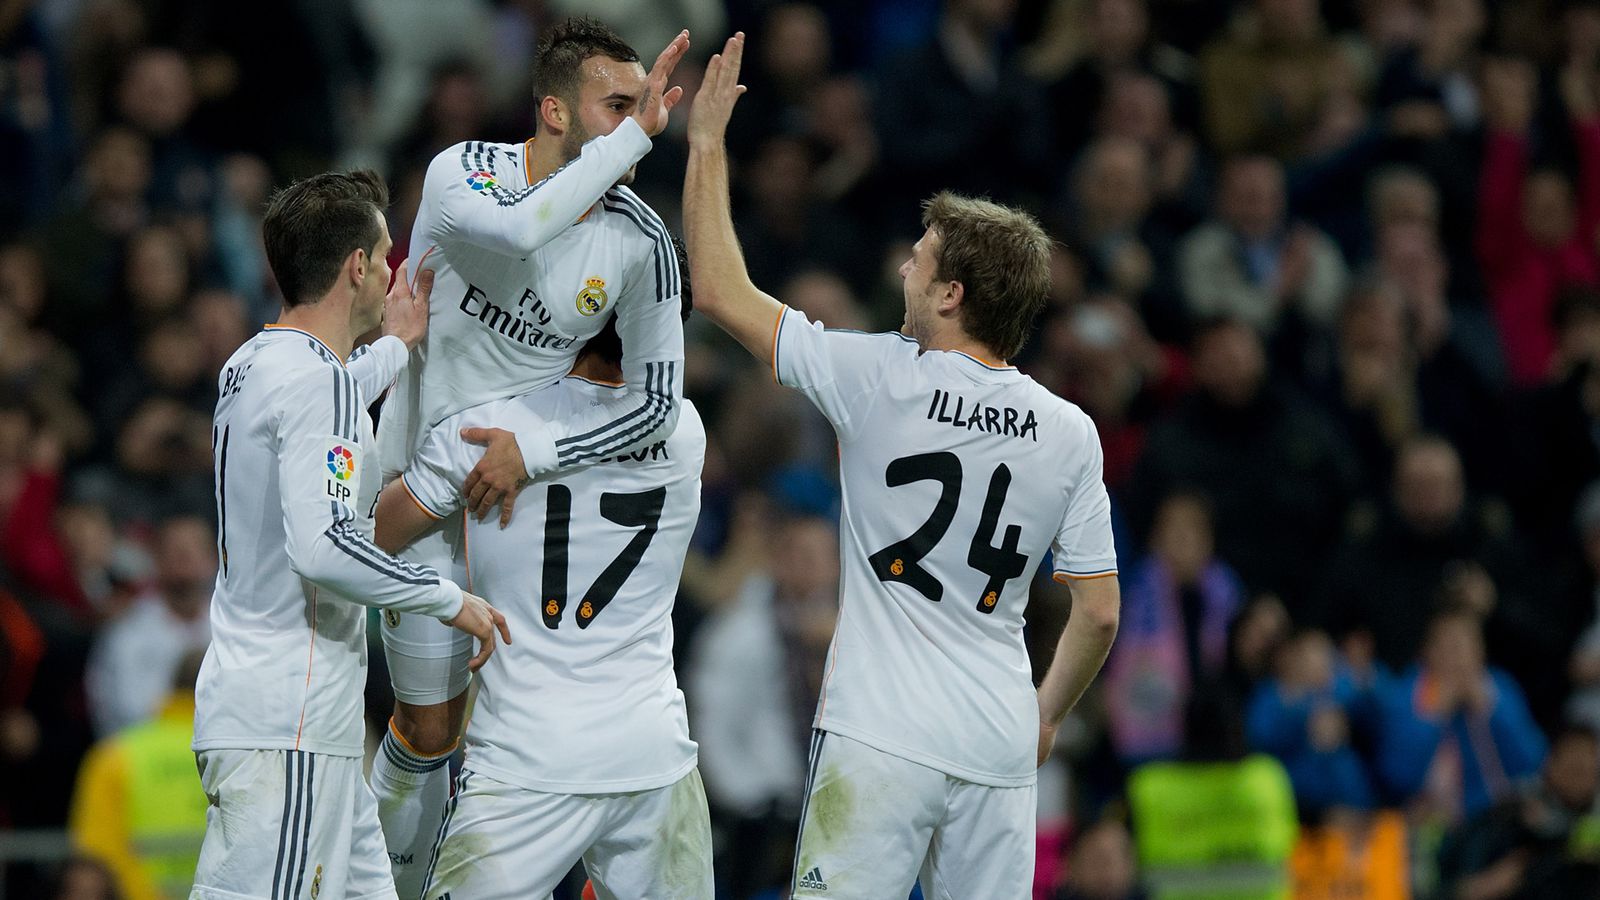 Real Madrid Vs Osasuna, Copa del Rey 2013-2014: 2-0 - Managing Madrid